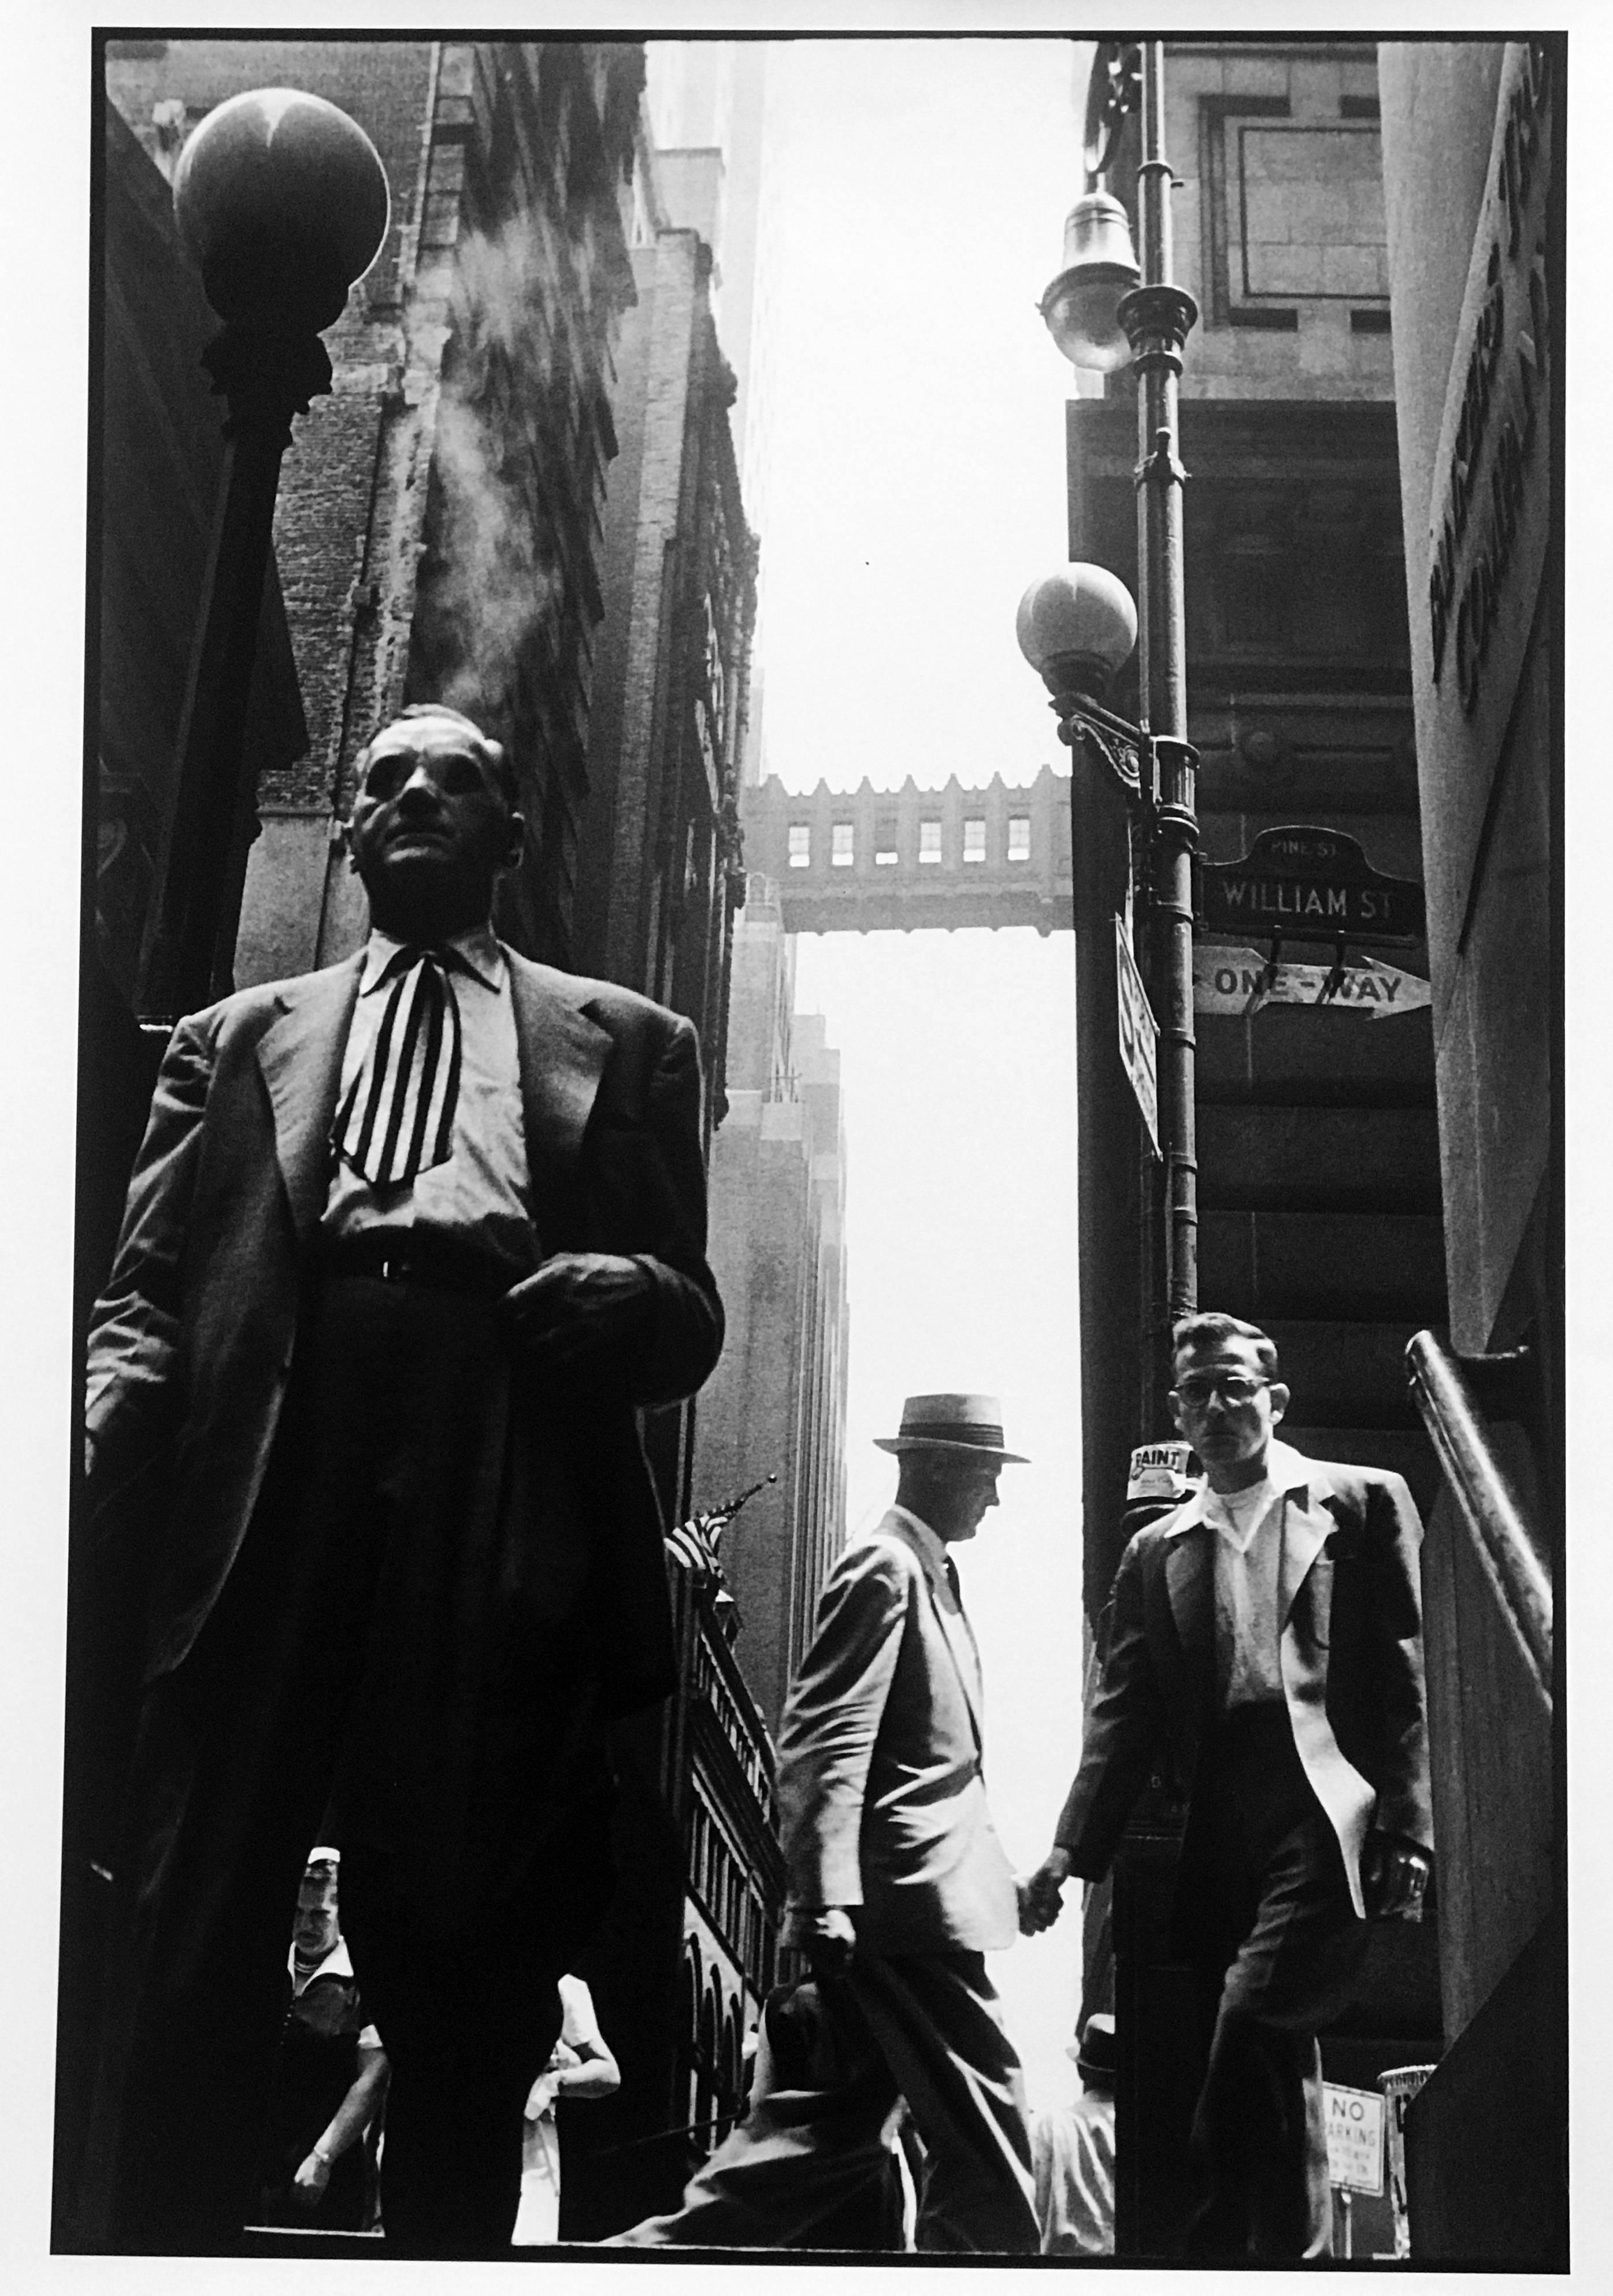 Leonard Freed Figurative Photograph - Wall Street, New York City, signed